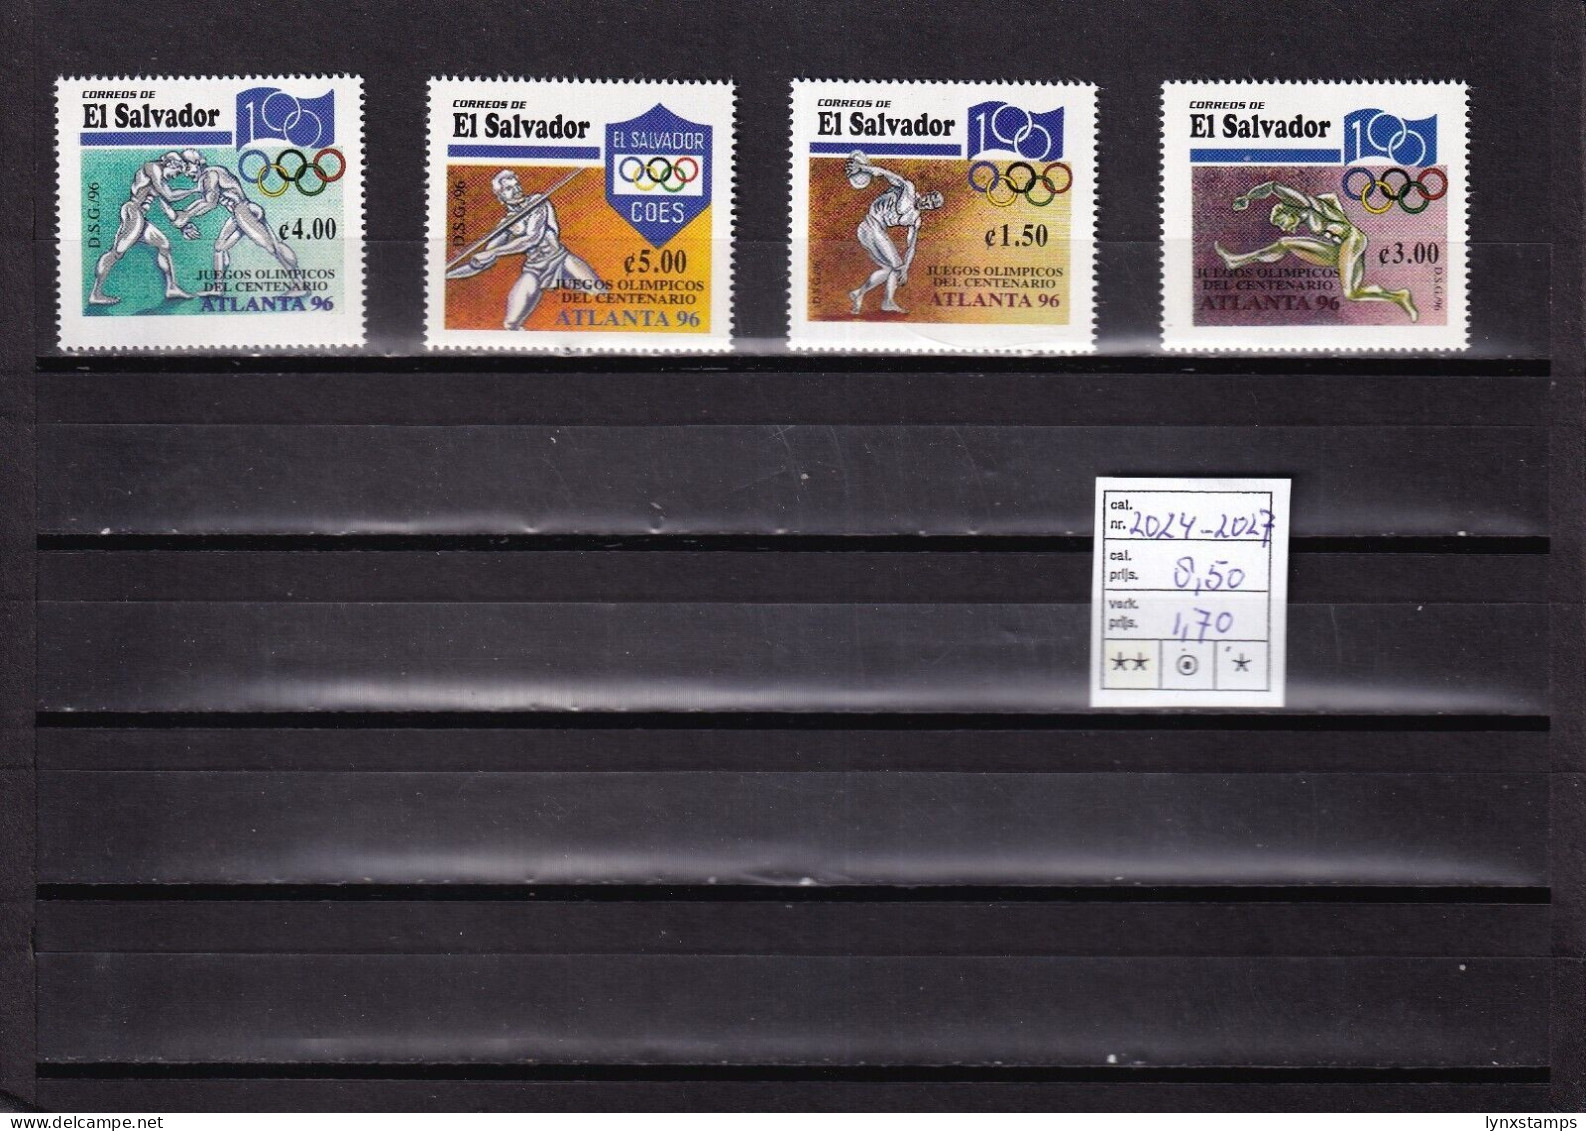 ER03 El Salvador 1996 Summer Olympic Games - MNH Stamp - El Salvador